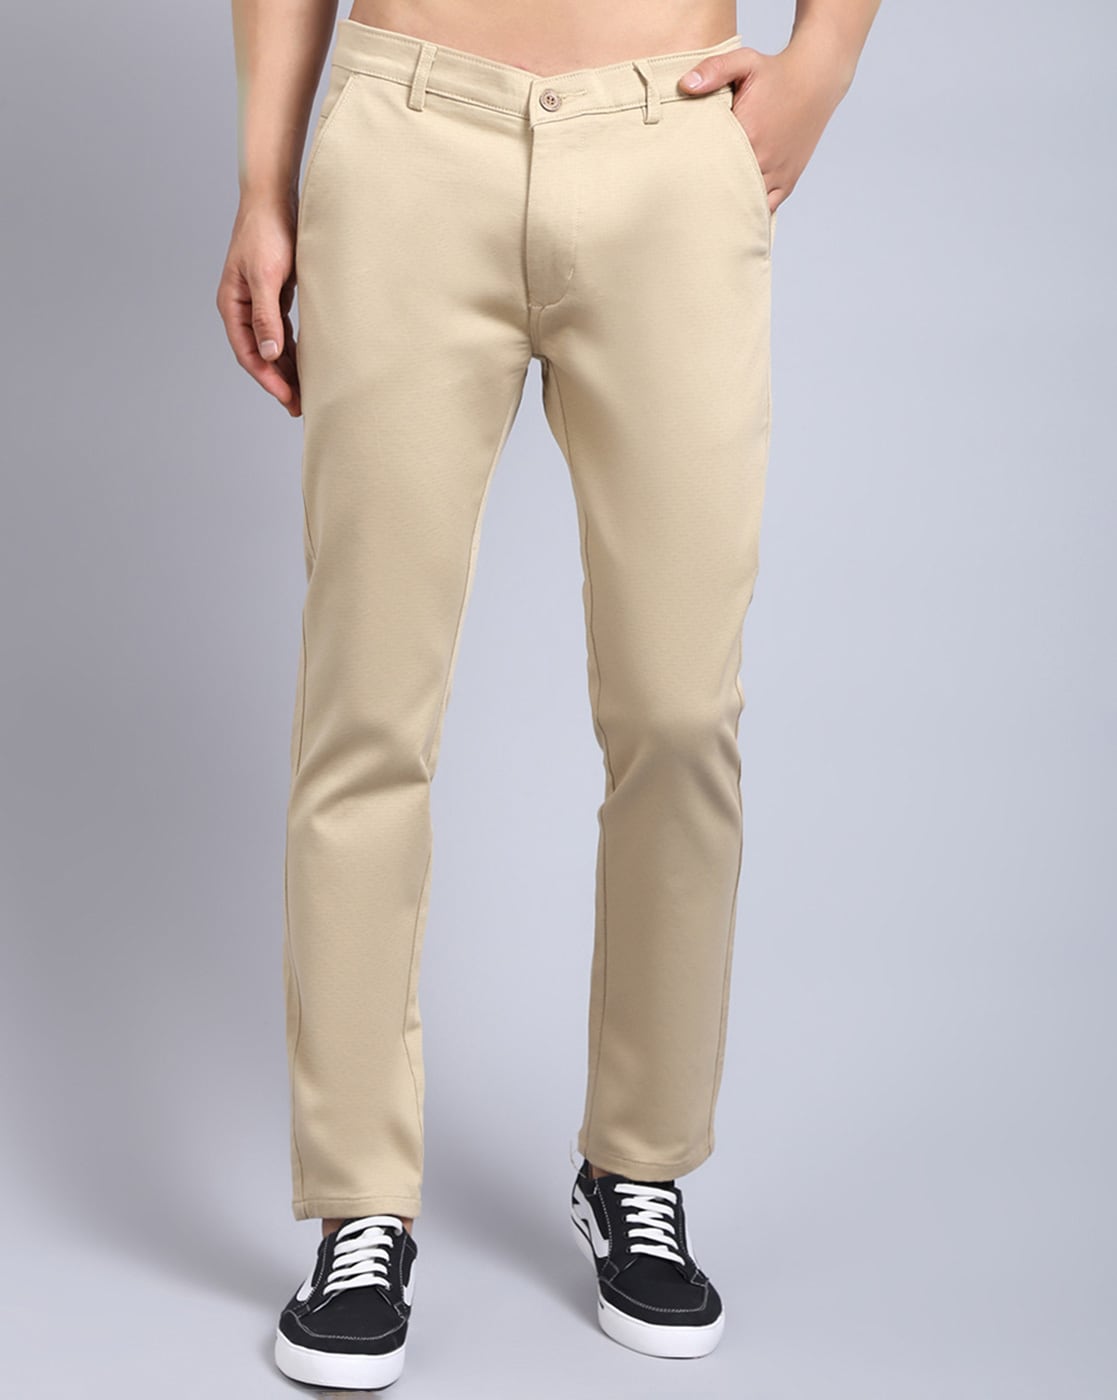 Buy Black Trousers  Pants for Men by NETWORK Online  Ajiocom